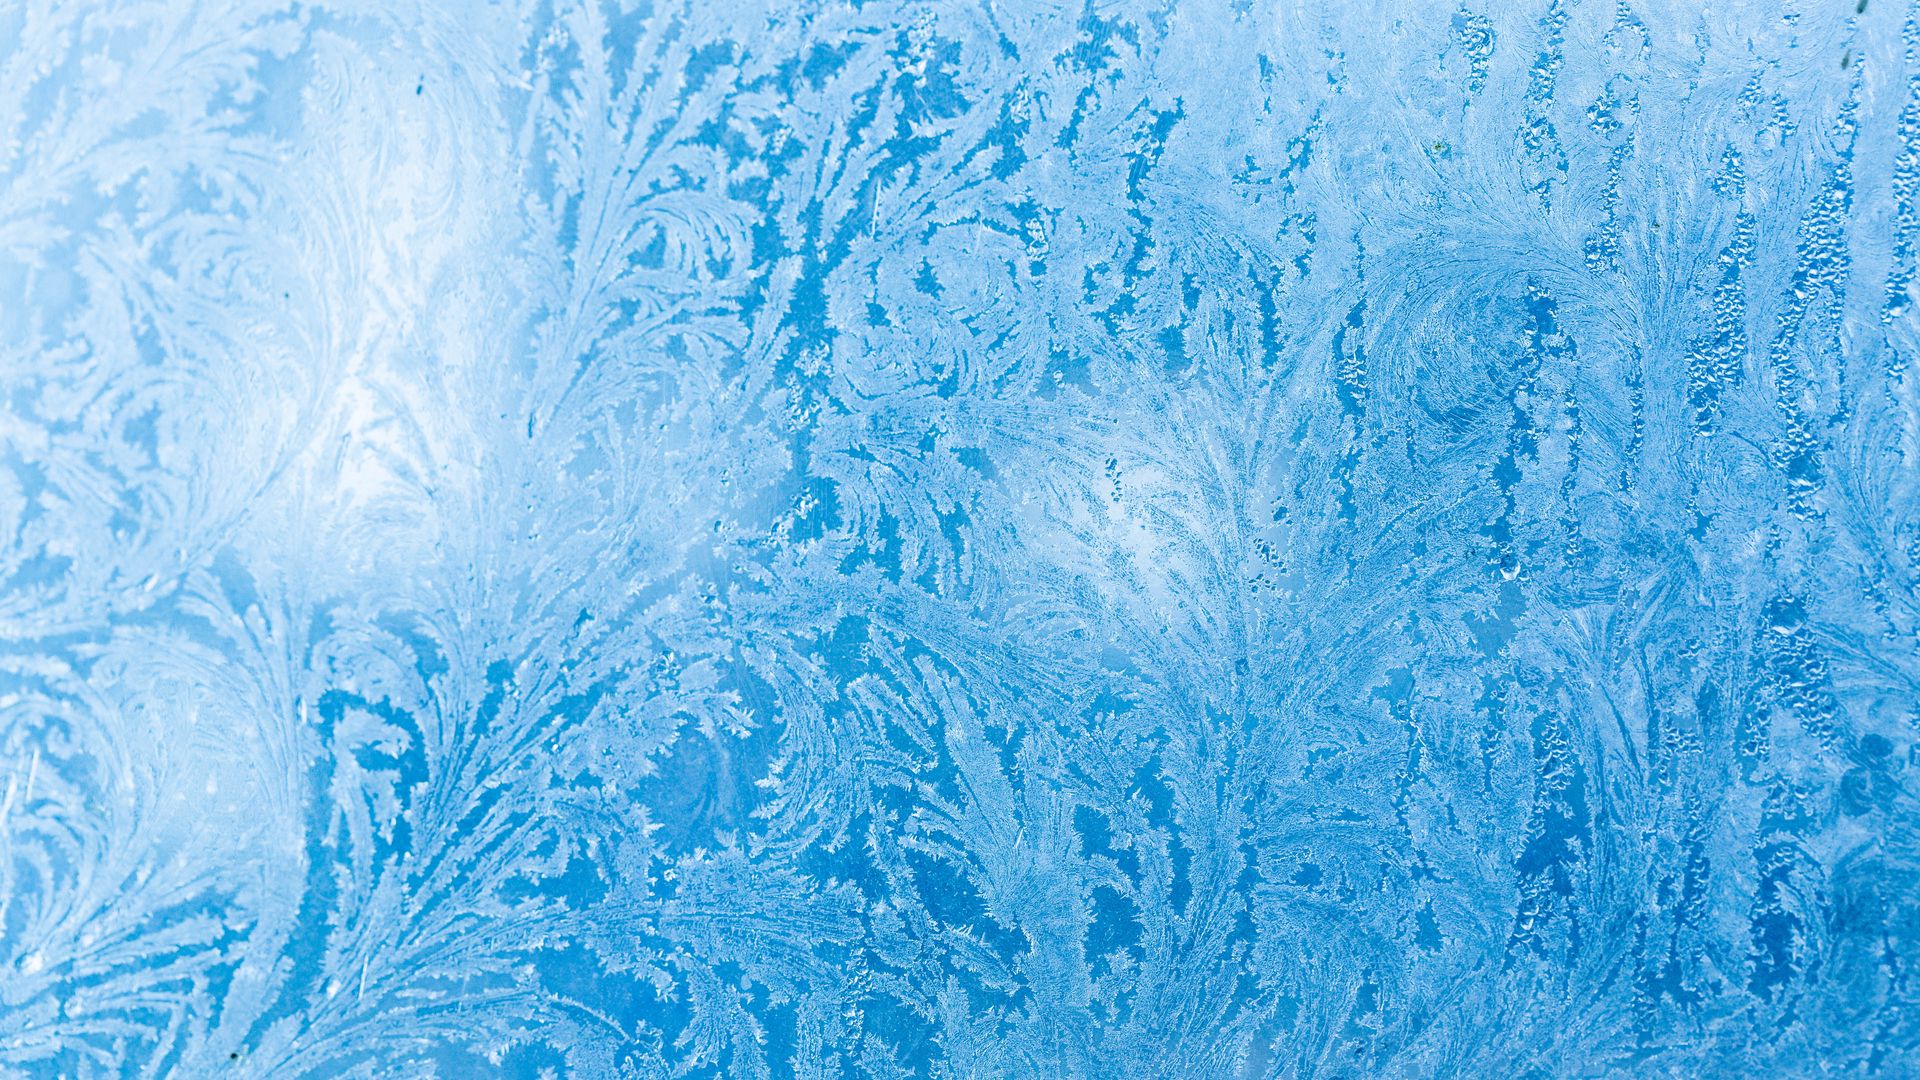 Download wallpaper 1920x1080 frost, glass, pattern, ice, frozen full hd,  hdtv, fhd, 1080p hd background